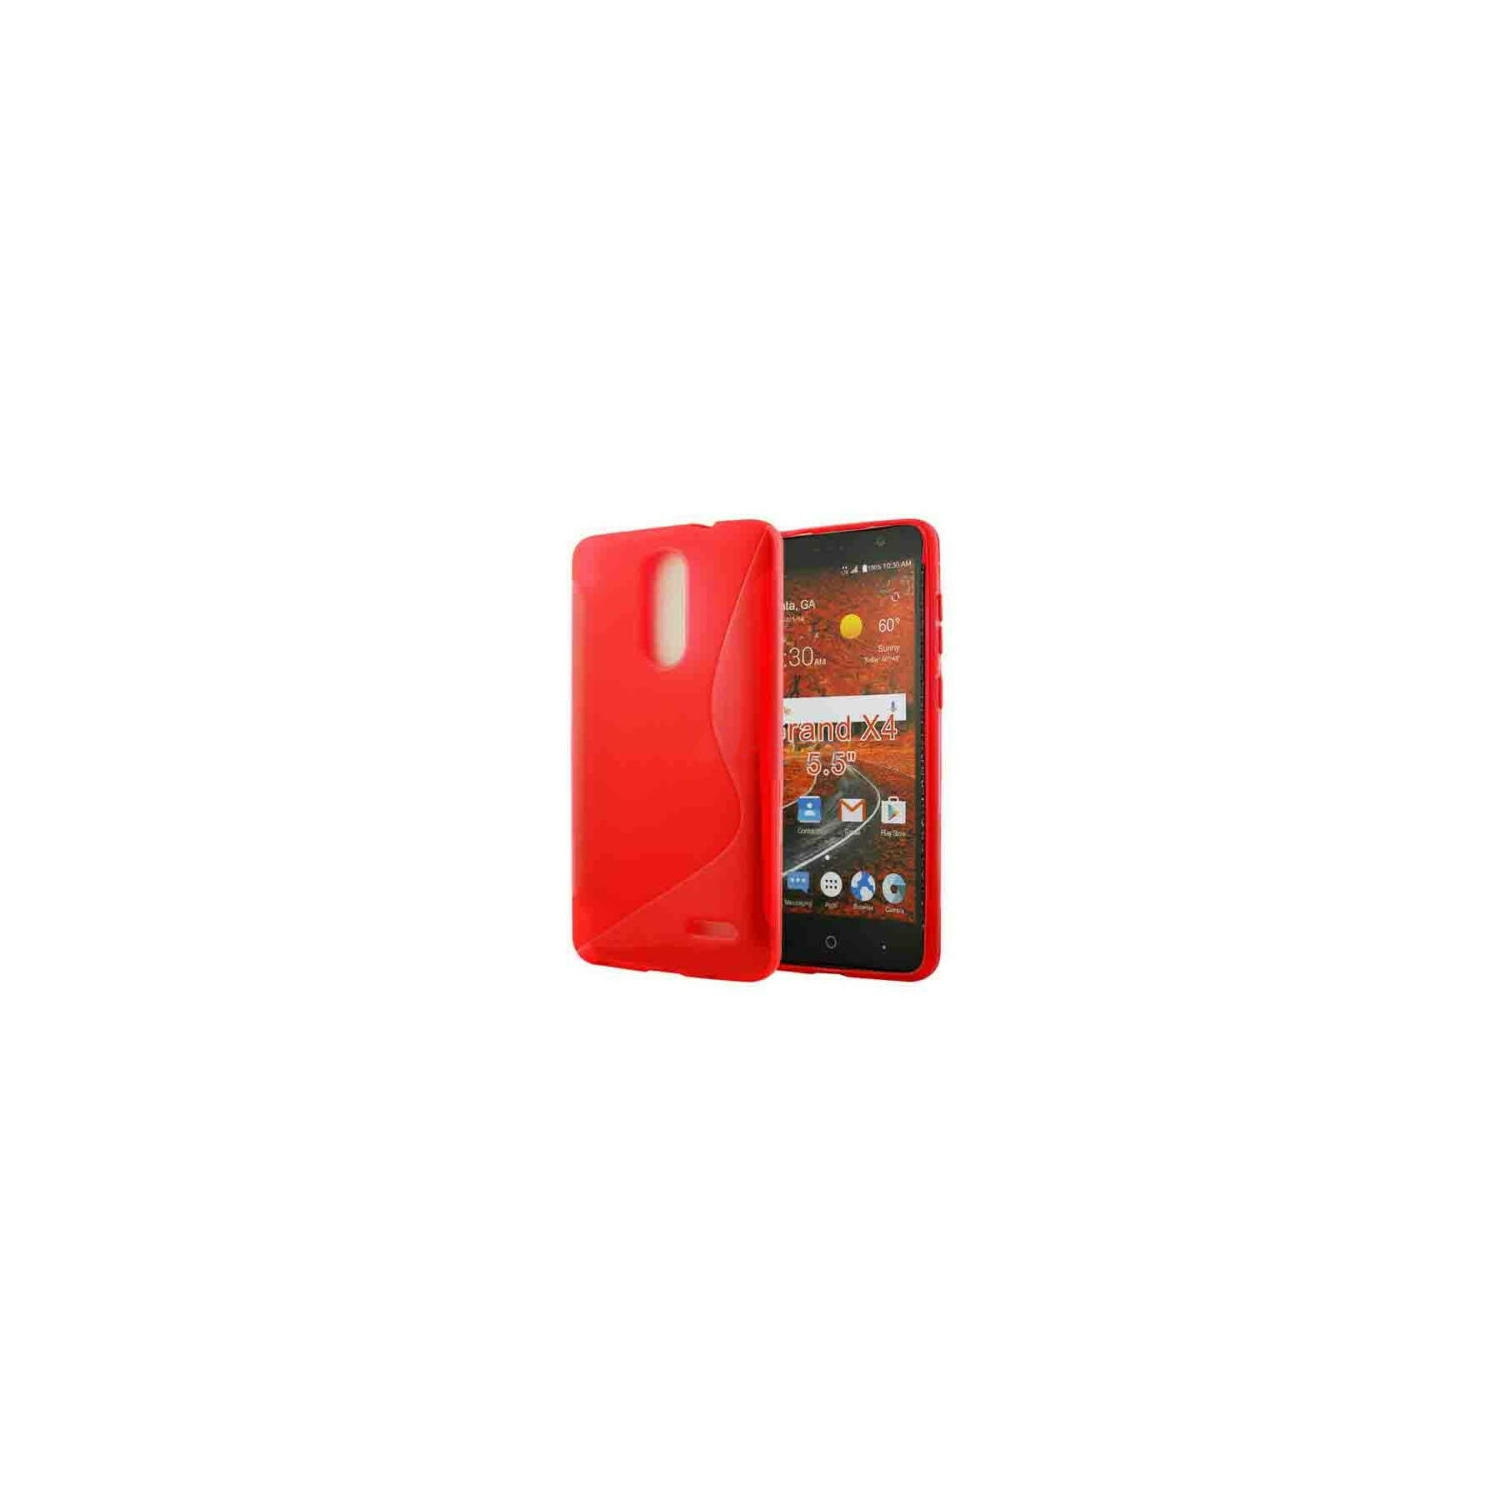 【CSmart】 Ultra Thin Soft TPU Silicone Jelly Bumper Back Cover Case for ZTE Grand X4, Red